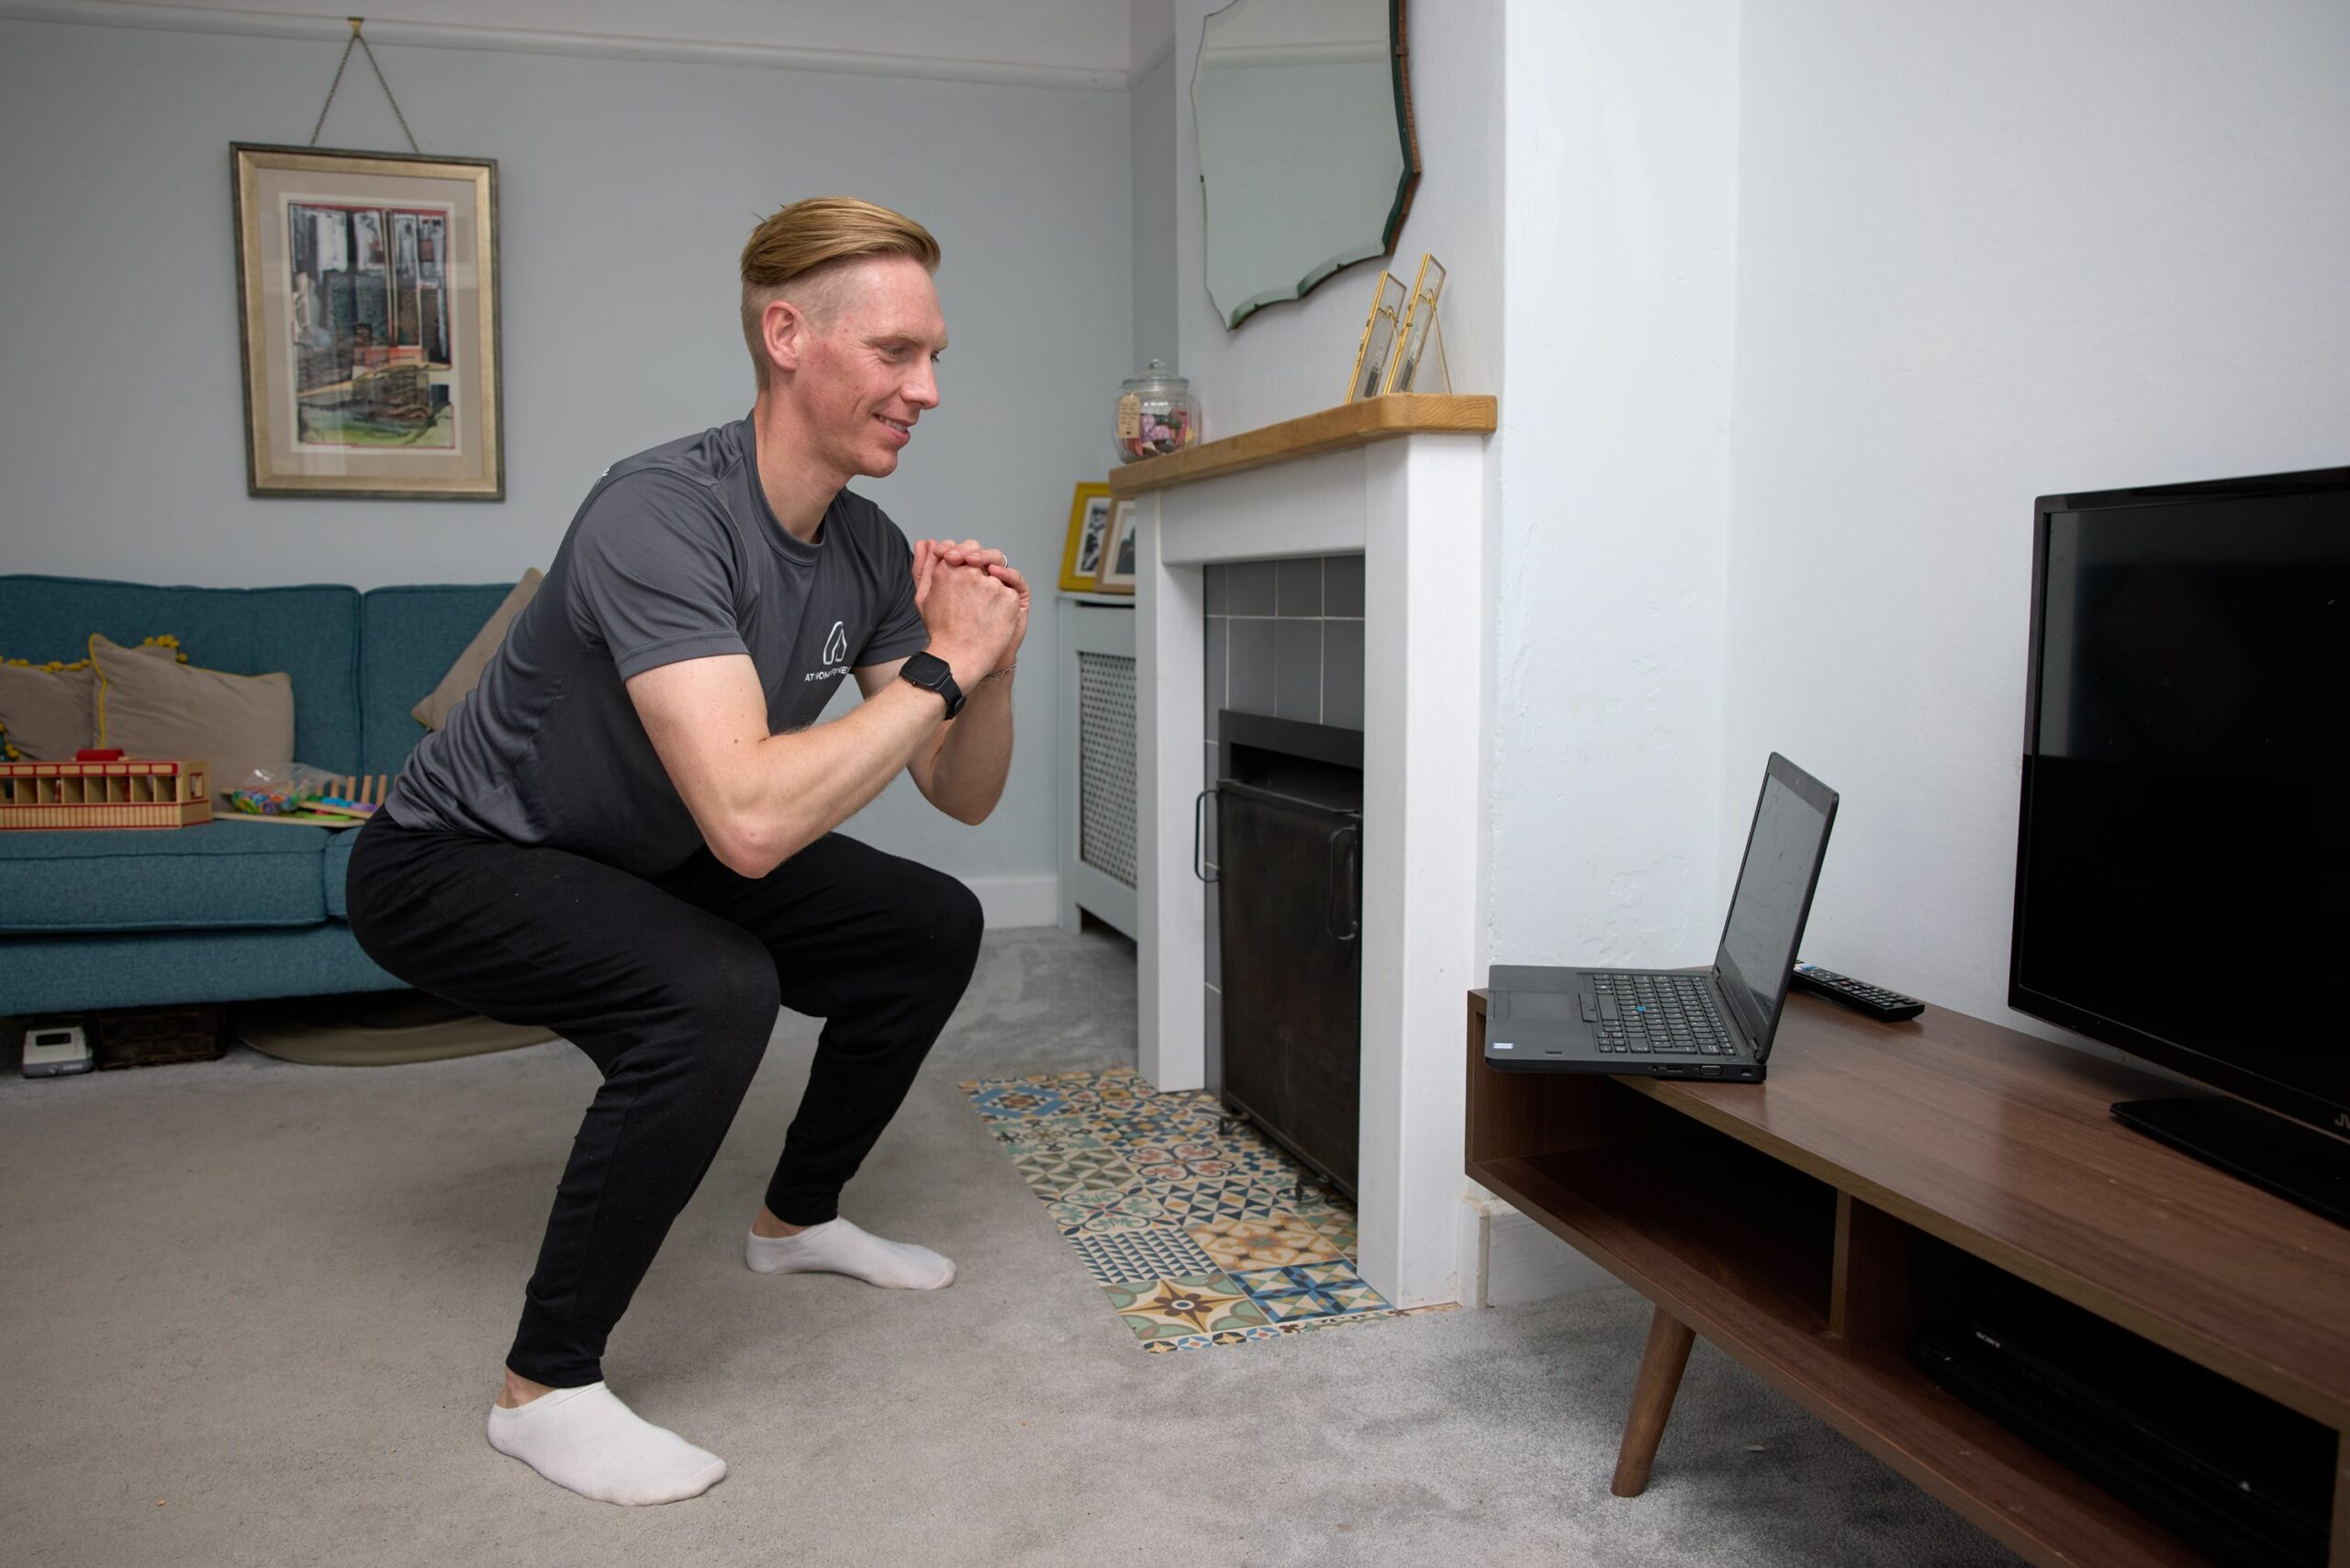 Martin demo'ing a squat online